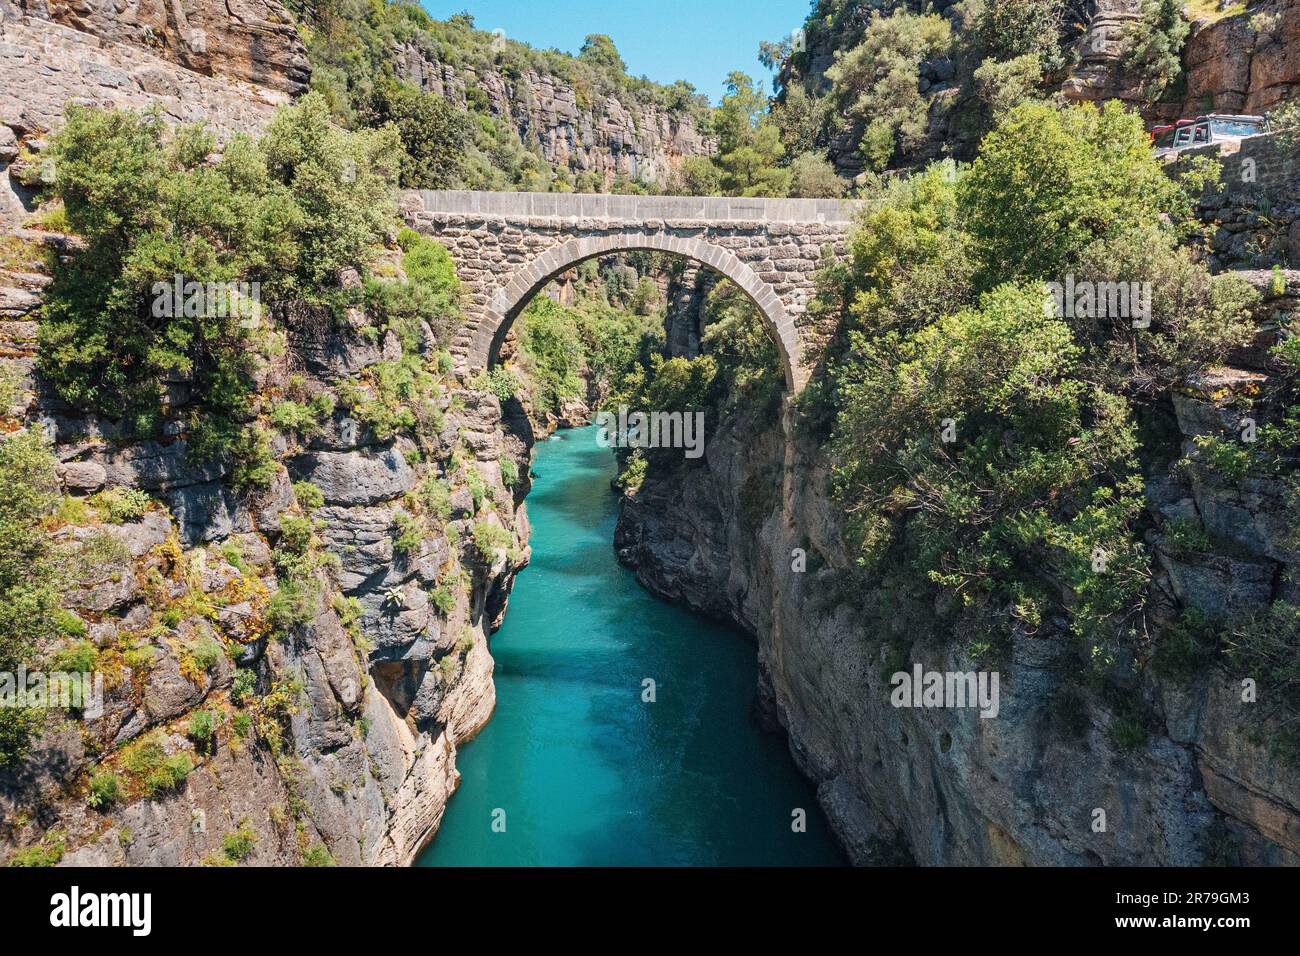 Koprulu ancient bridge in Tazi canyon in Antalya region Stock Photo